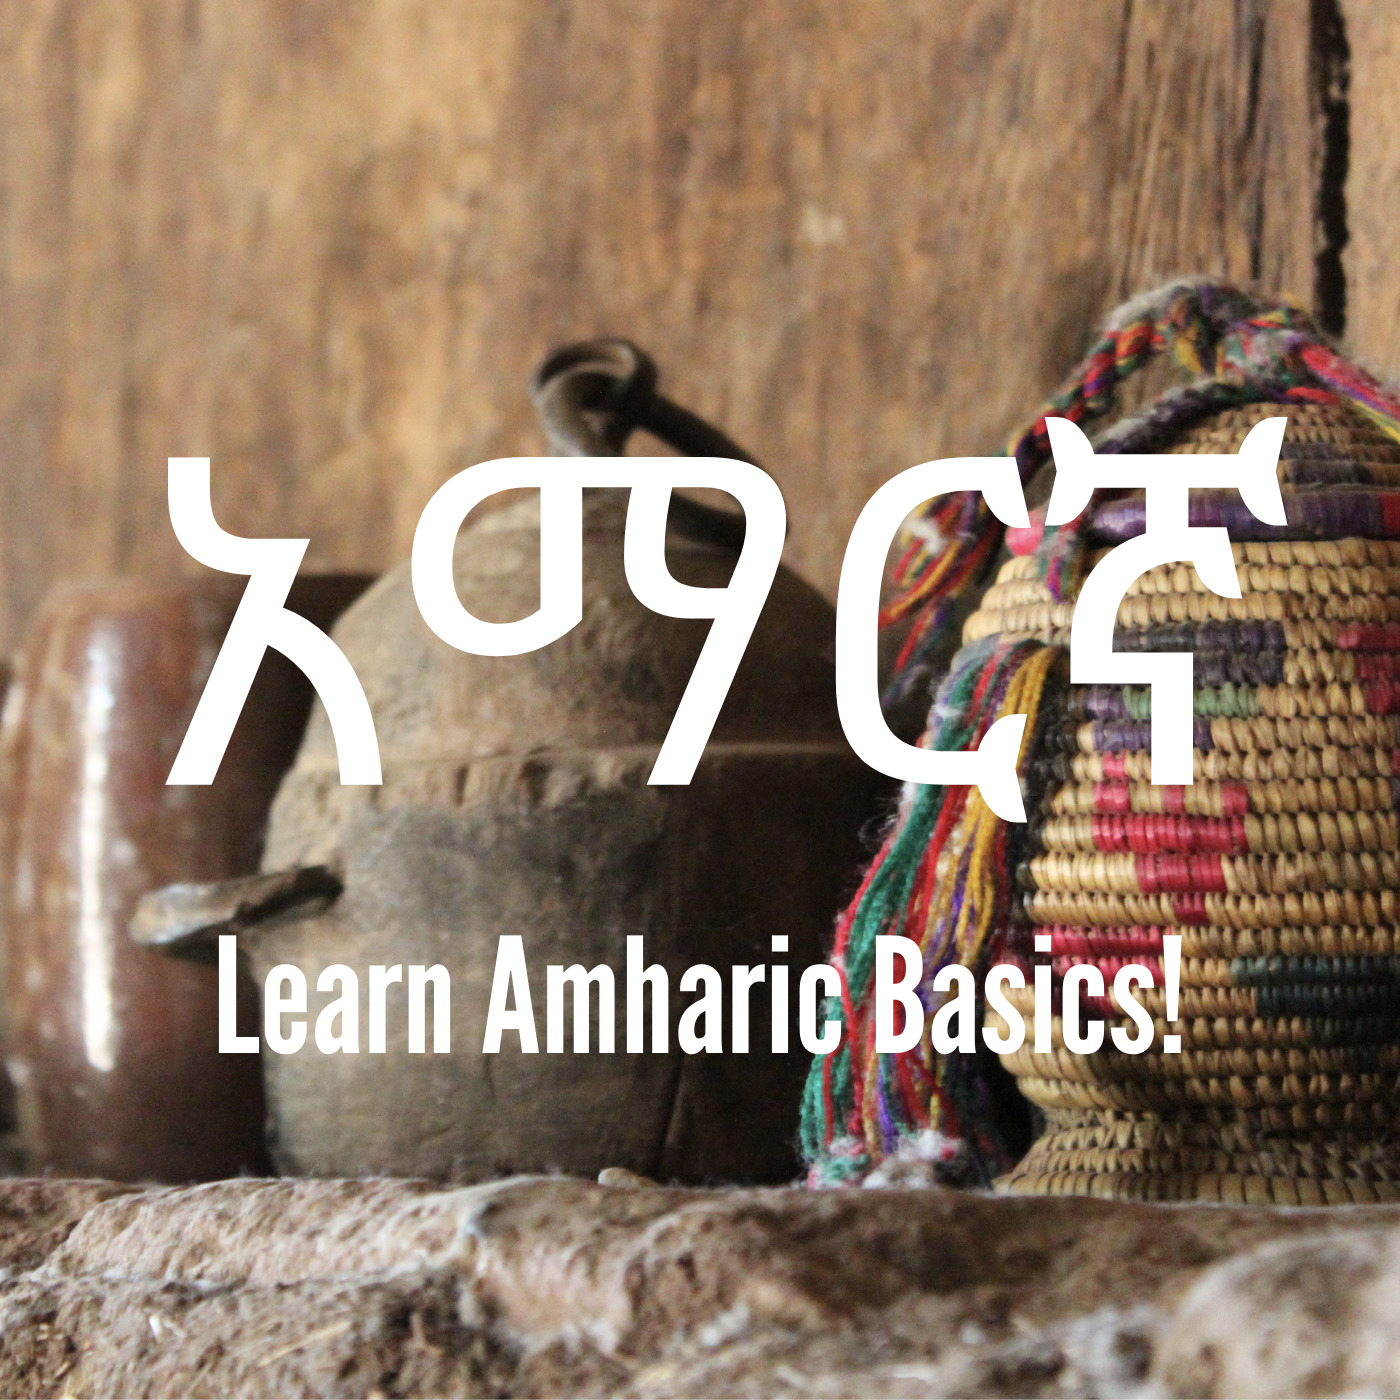 Episode 5: Learn Amharic Basics! - Unit 5.1